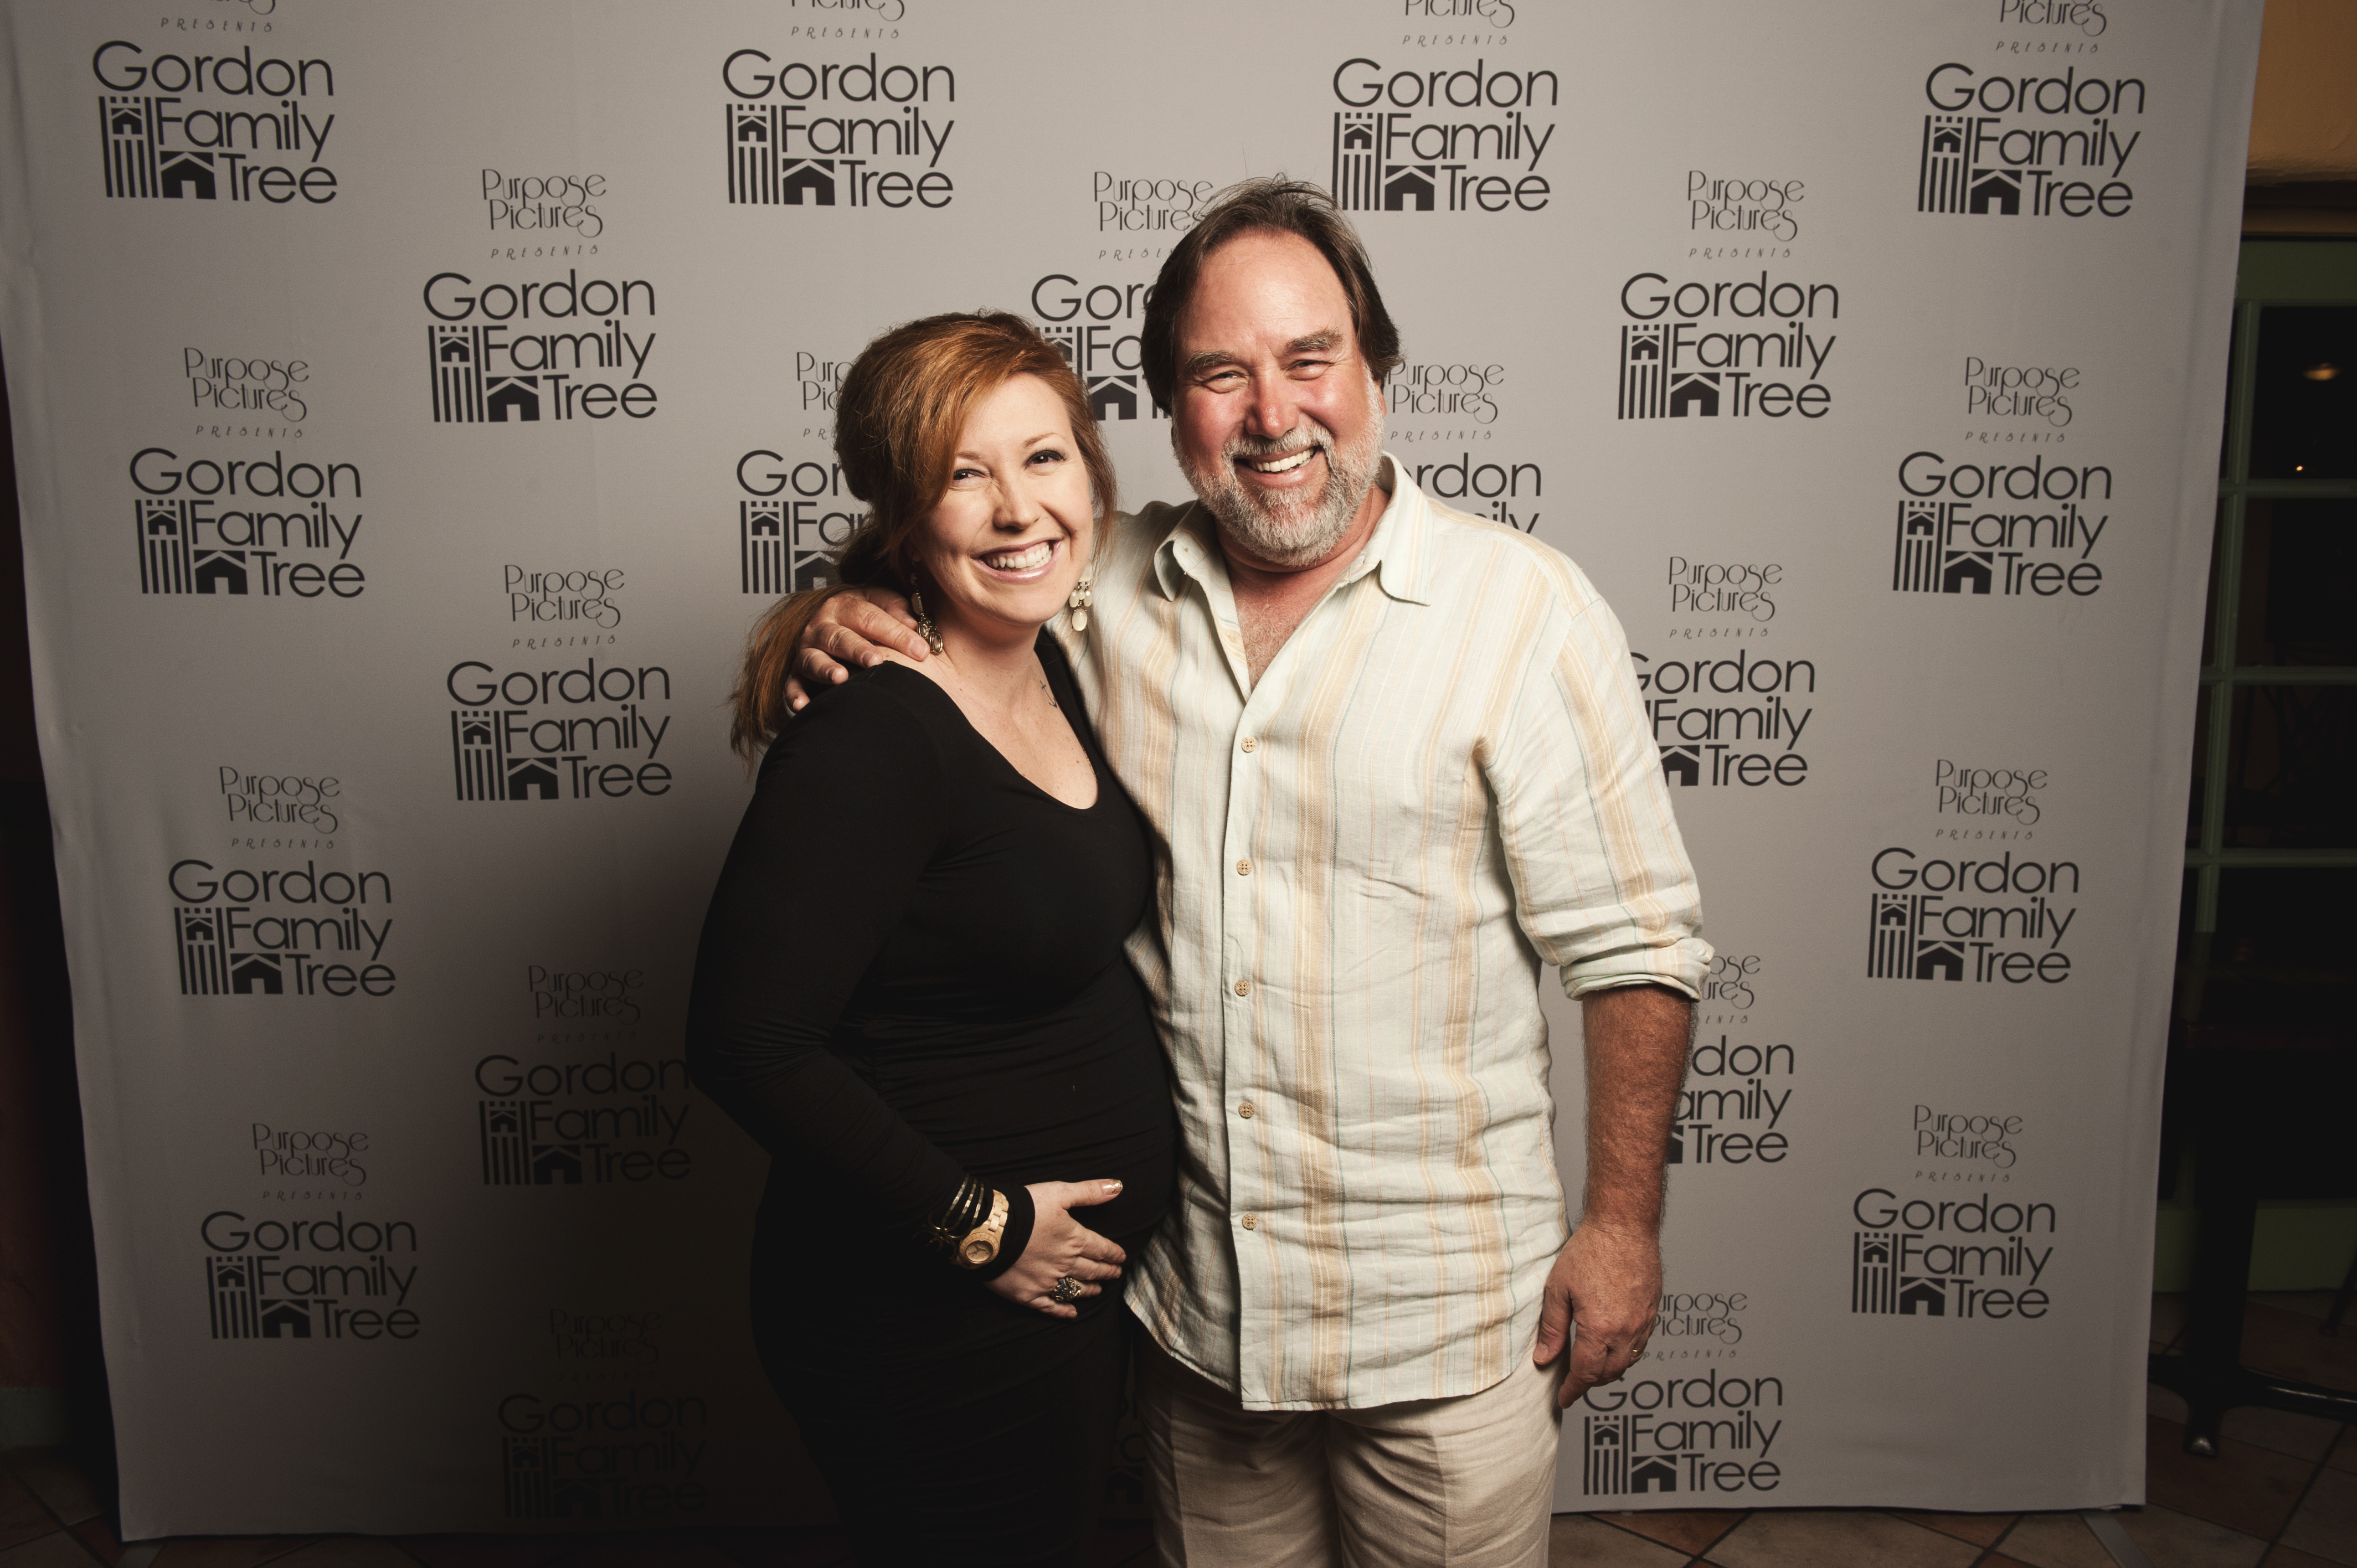 'Gordon Family Tree' World Premiere. A VERY PREGNANT Exec Producer/Actress Jennica Schwartzman and on-screen Father Actor Richard Karn.